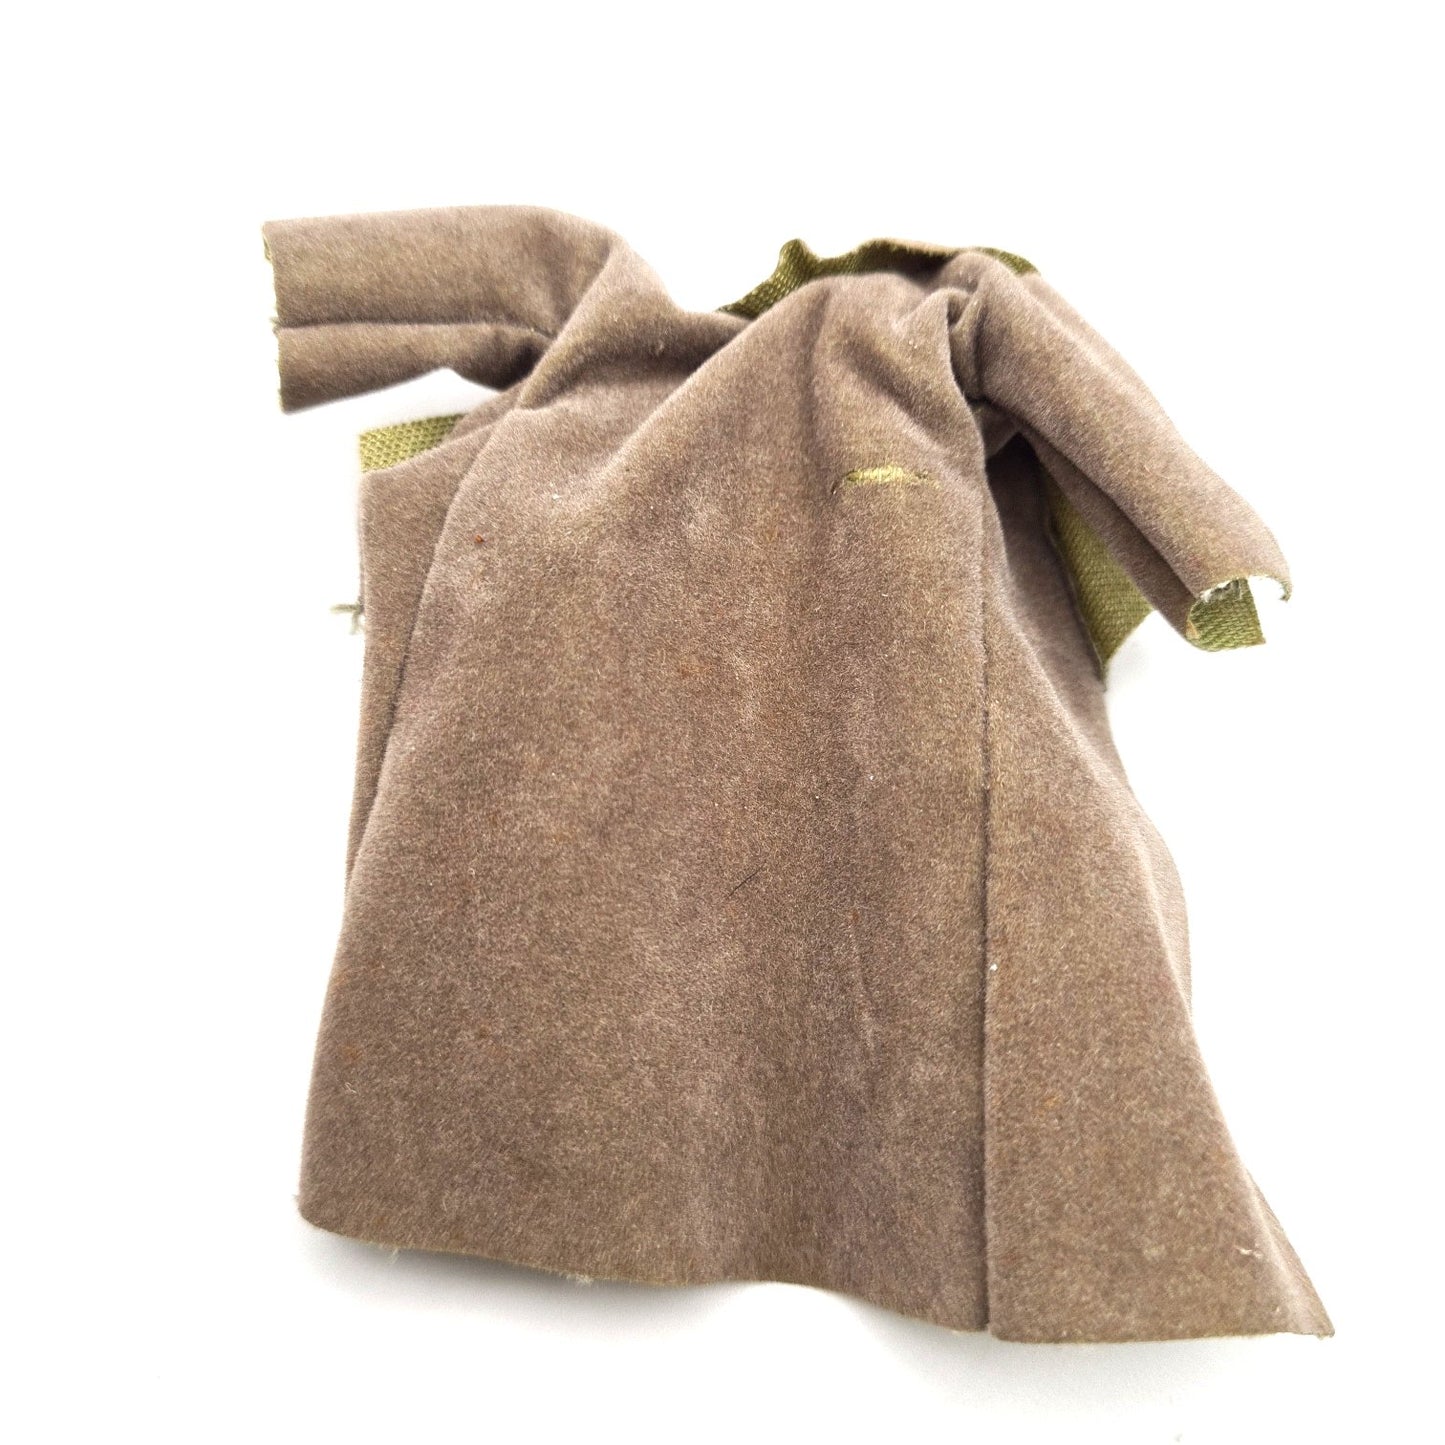 Star Wars Vintage Bib Fortuna Cloak Coat Jacket Original Accessory